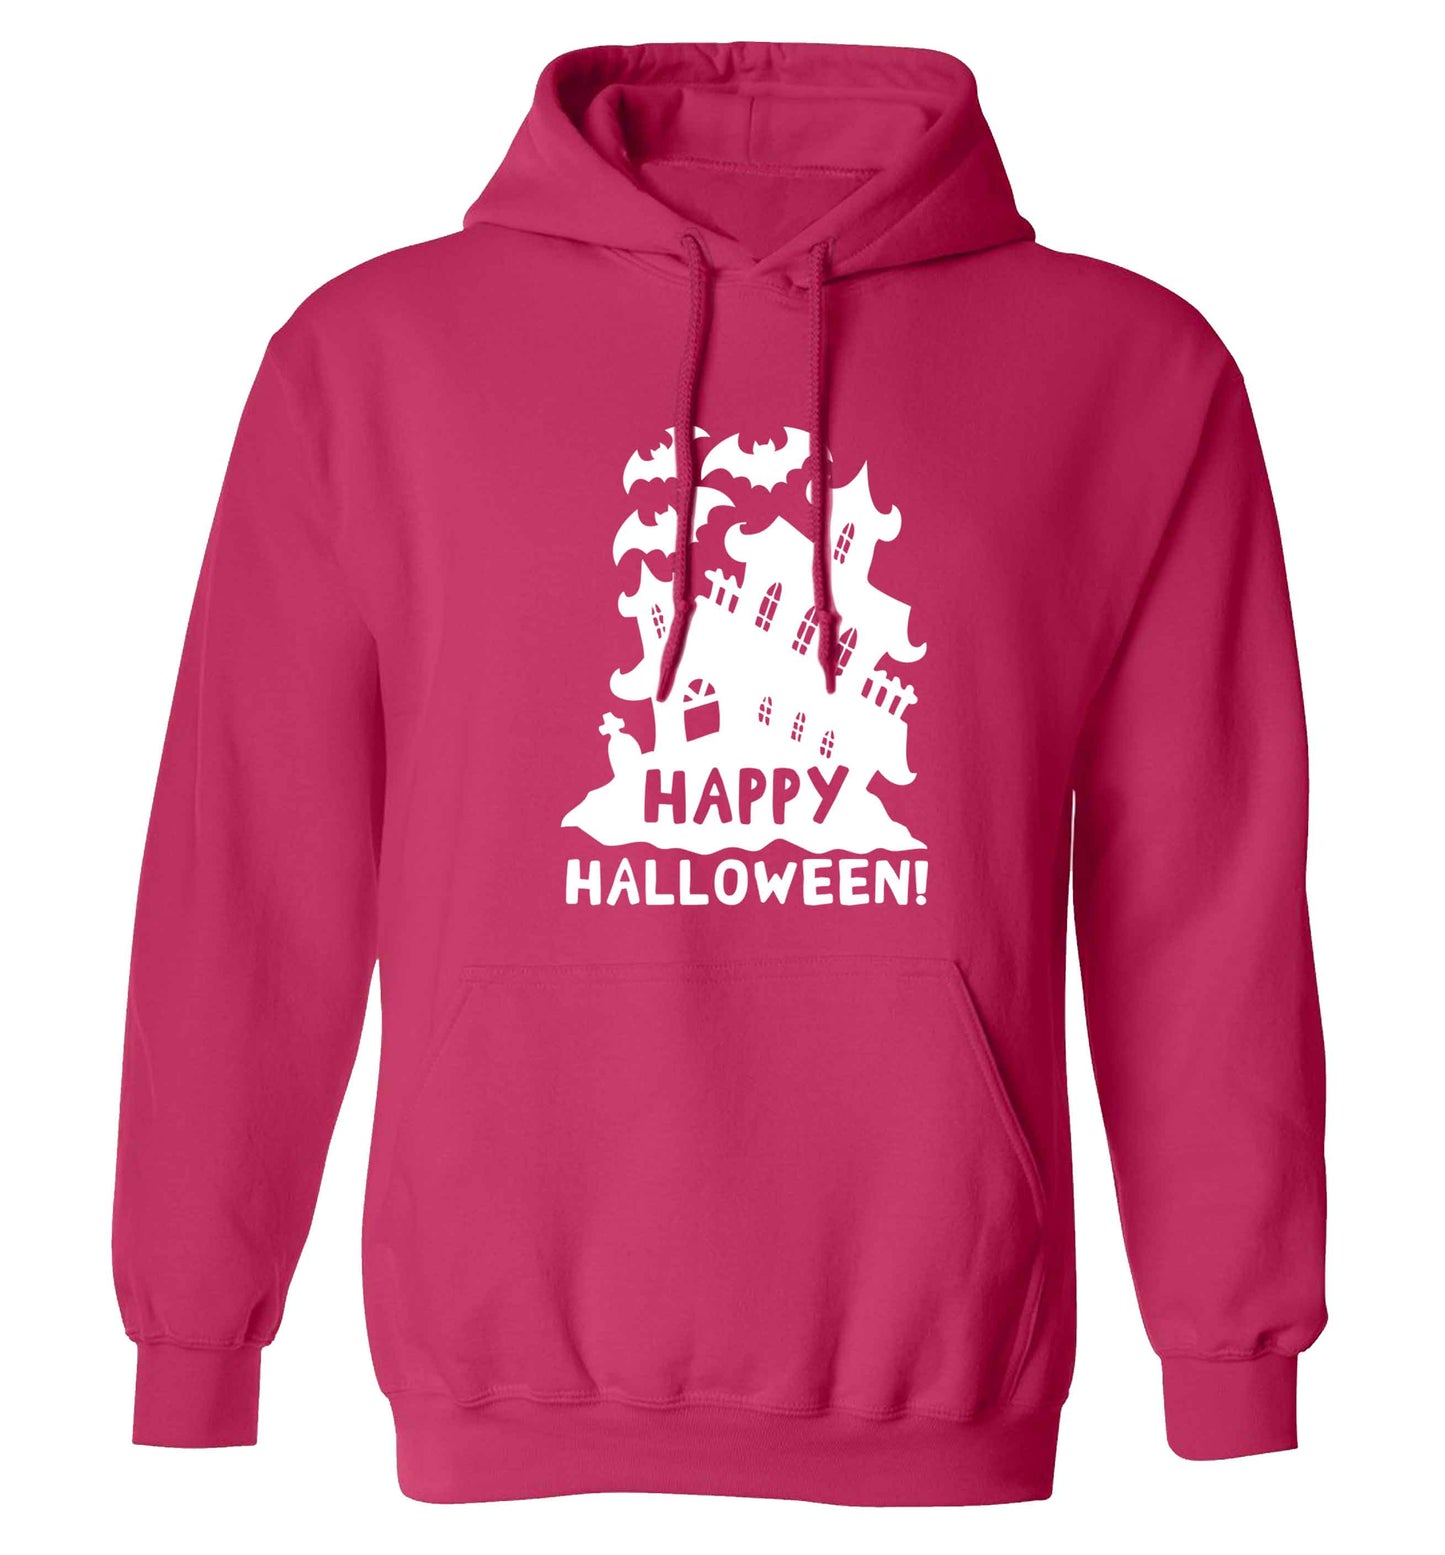 Happy halloween - haunted house adults unisex pink hoodie 2XL